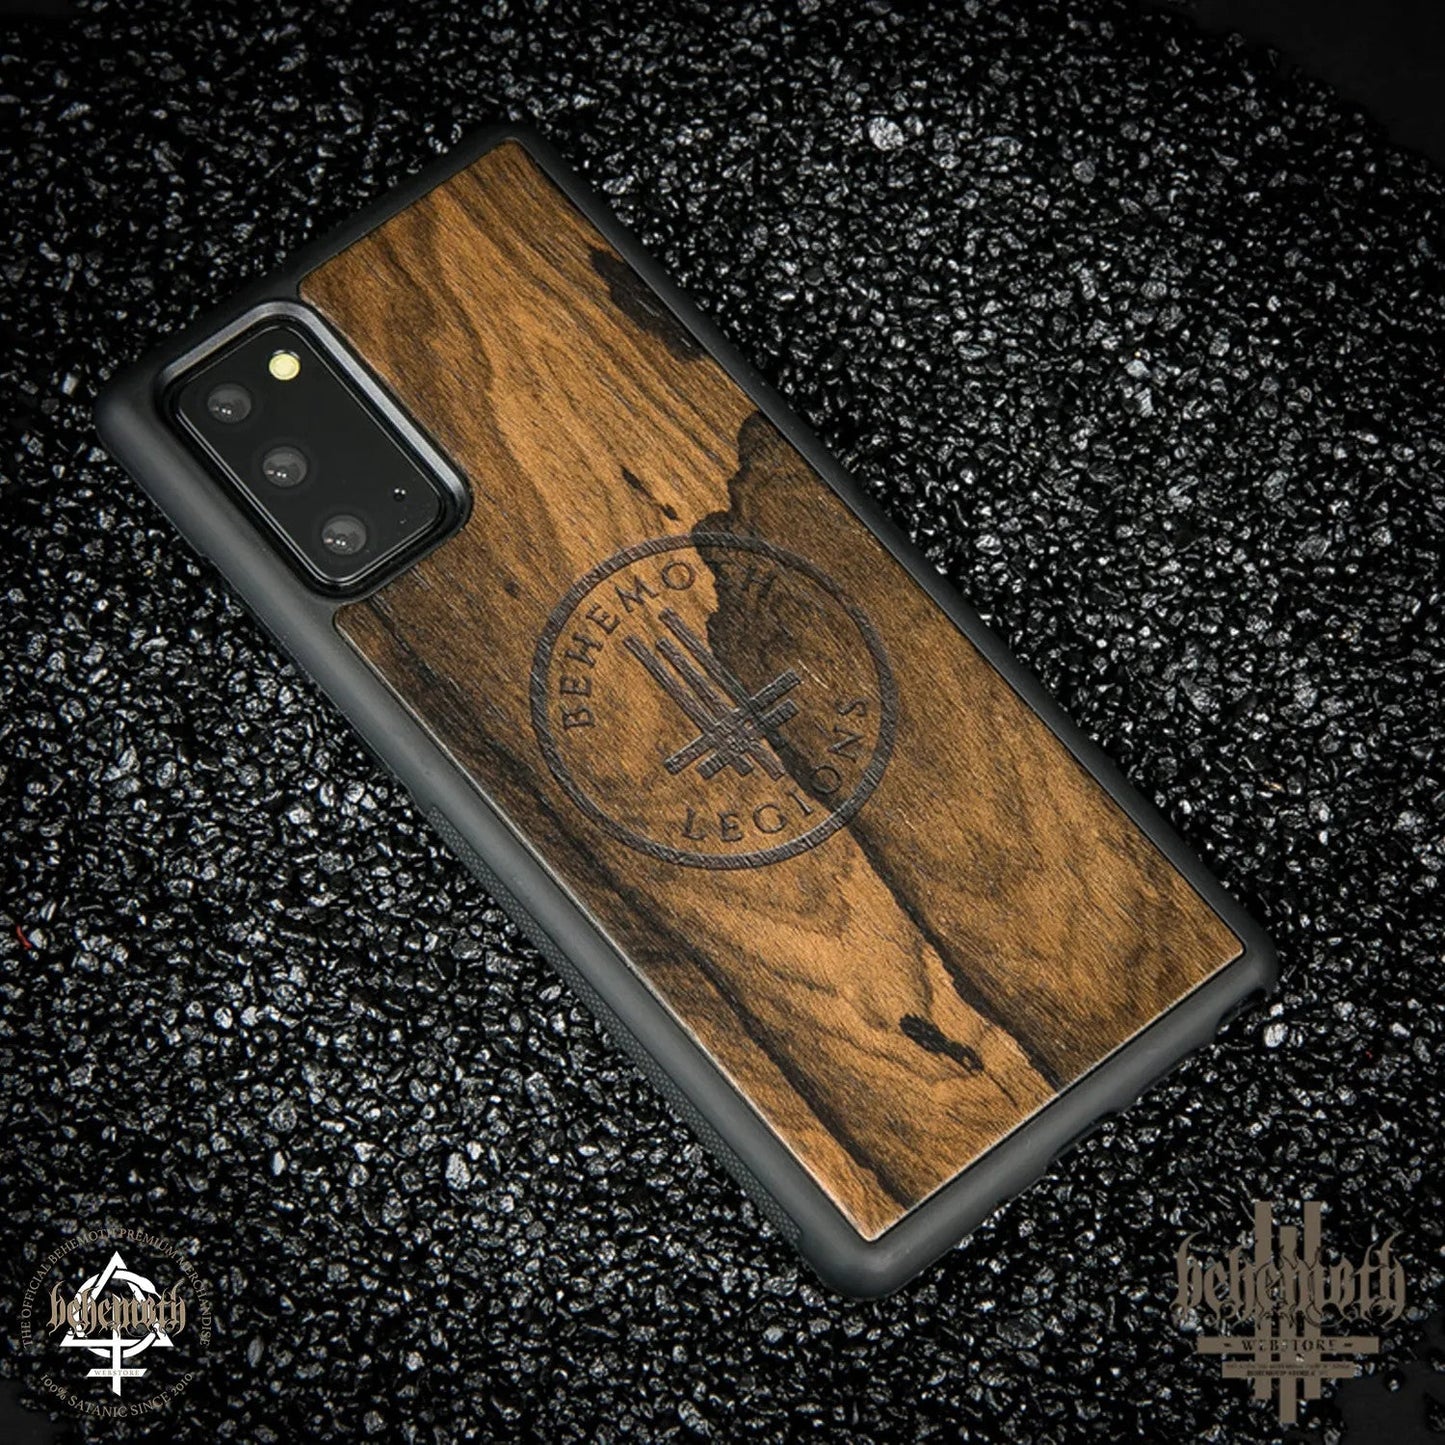 Samsung Galaxy Note 20 case with wood finishing and Behemoth 'Legions' logo